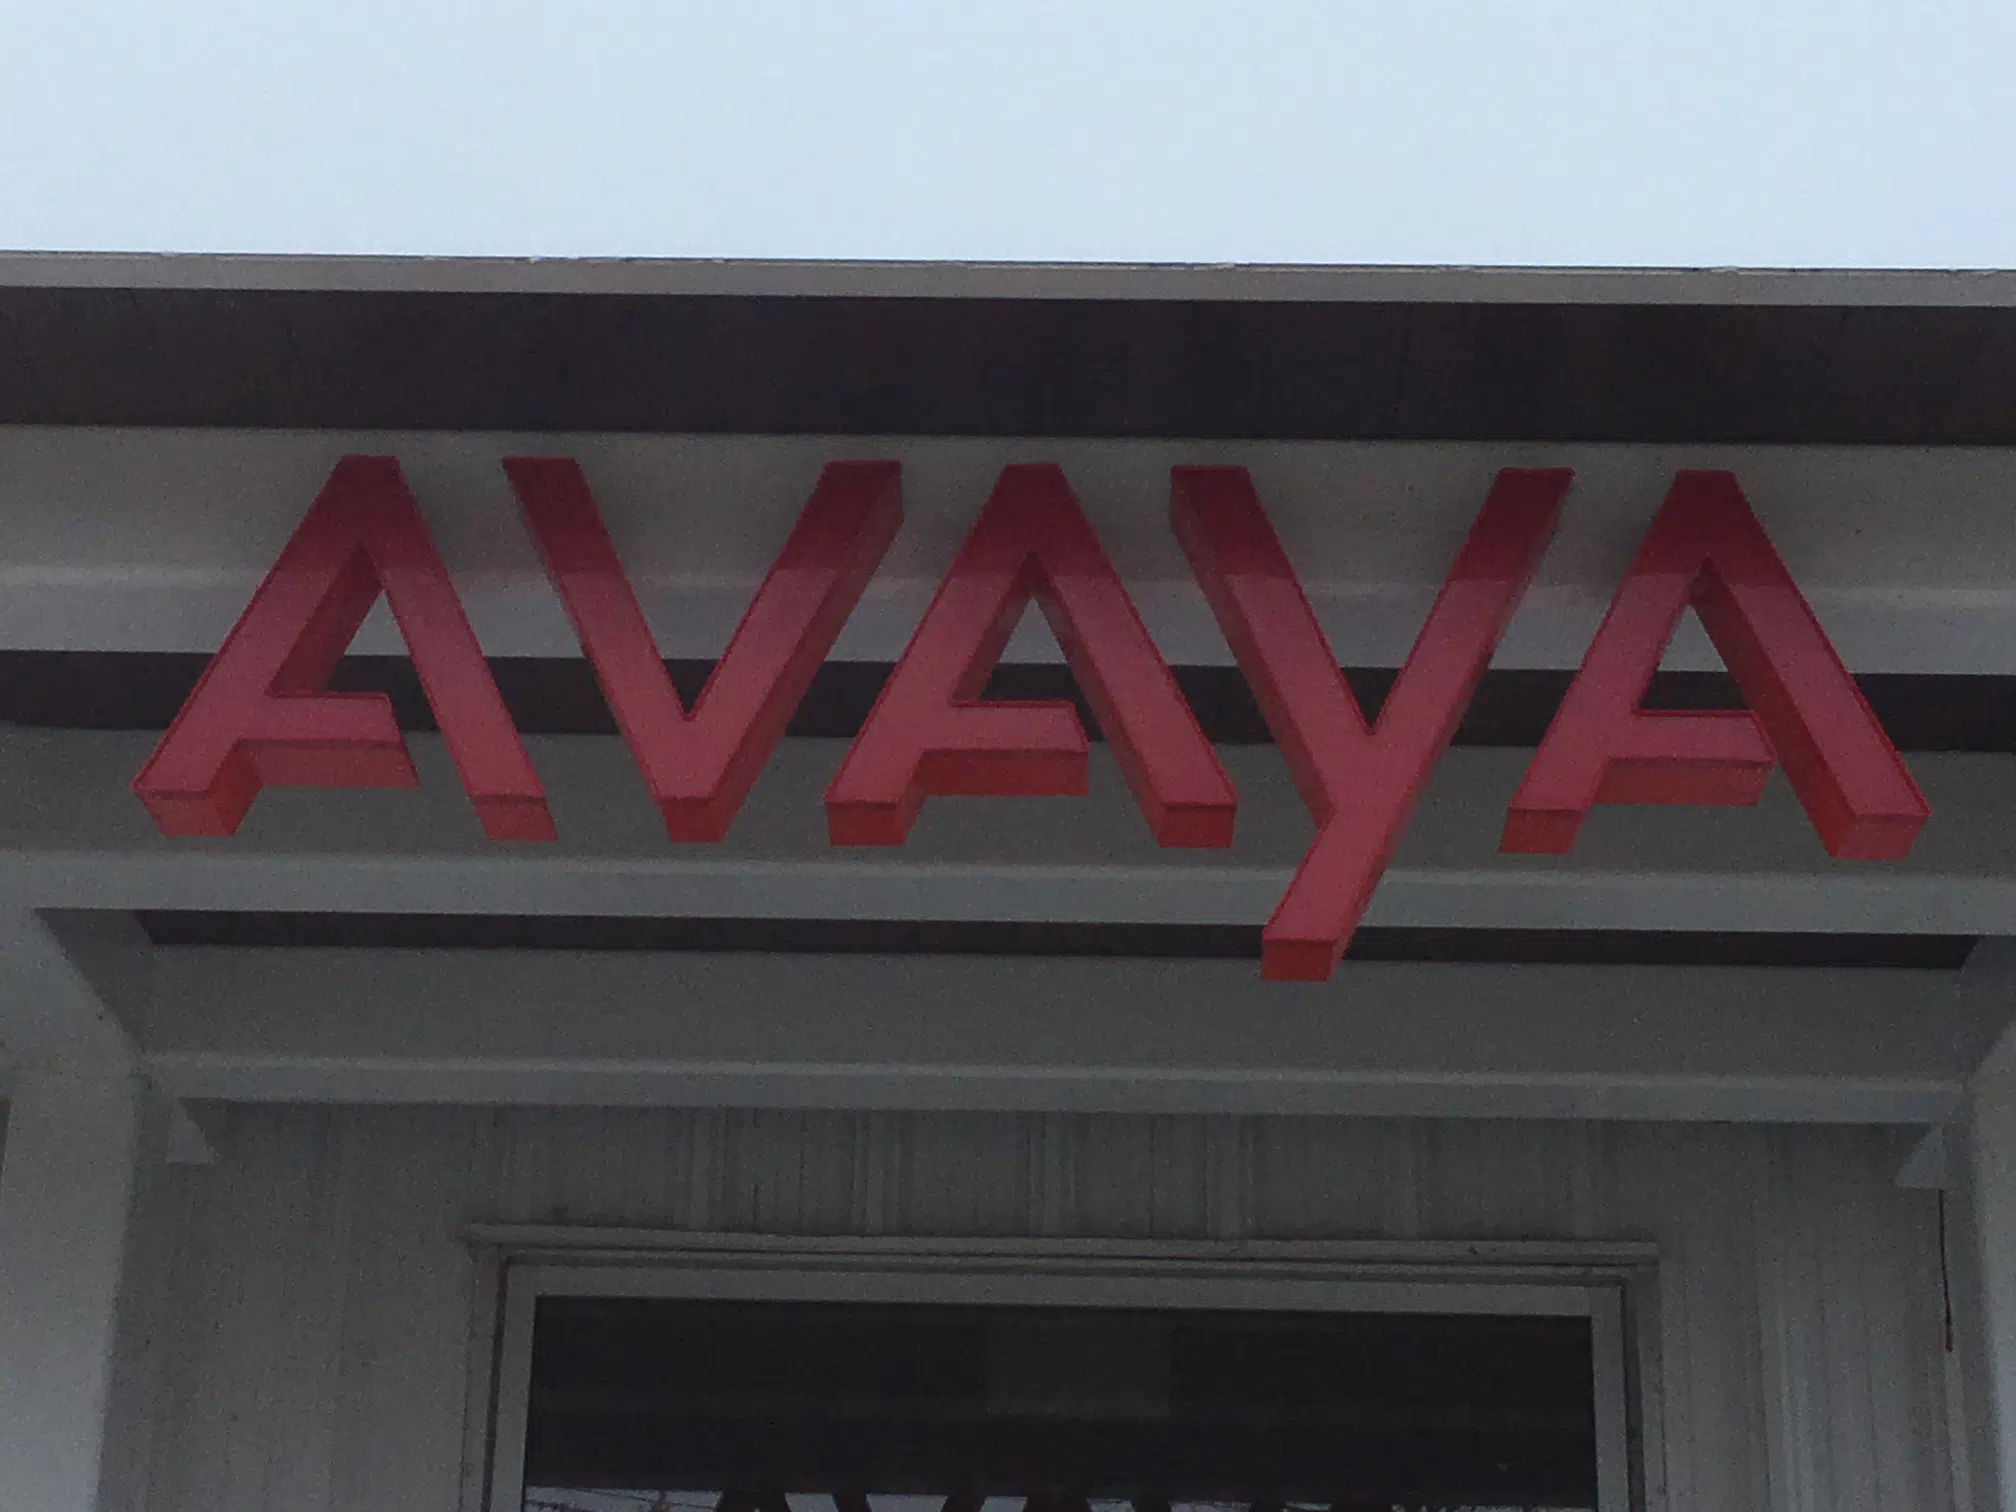 Avaya closing their doors in mid-2019